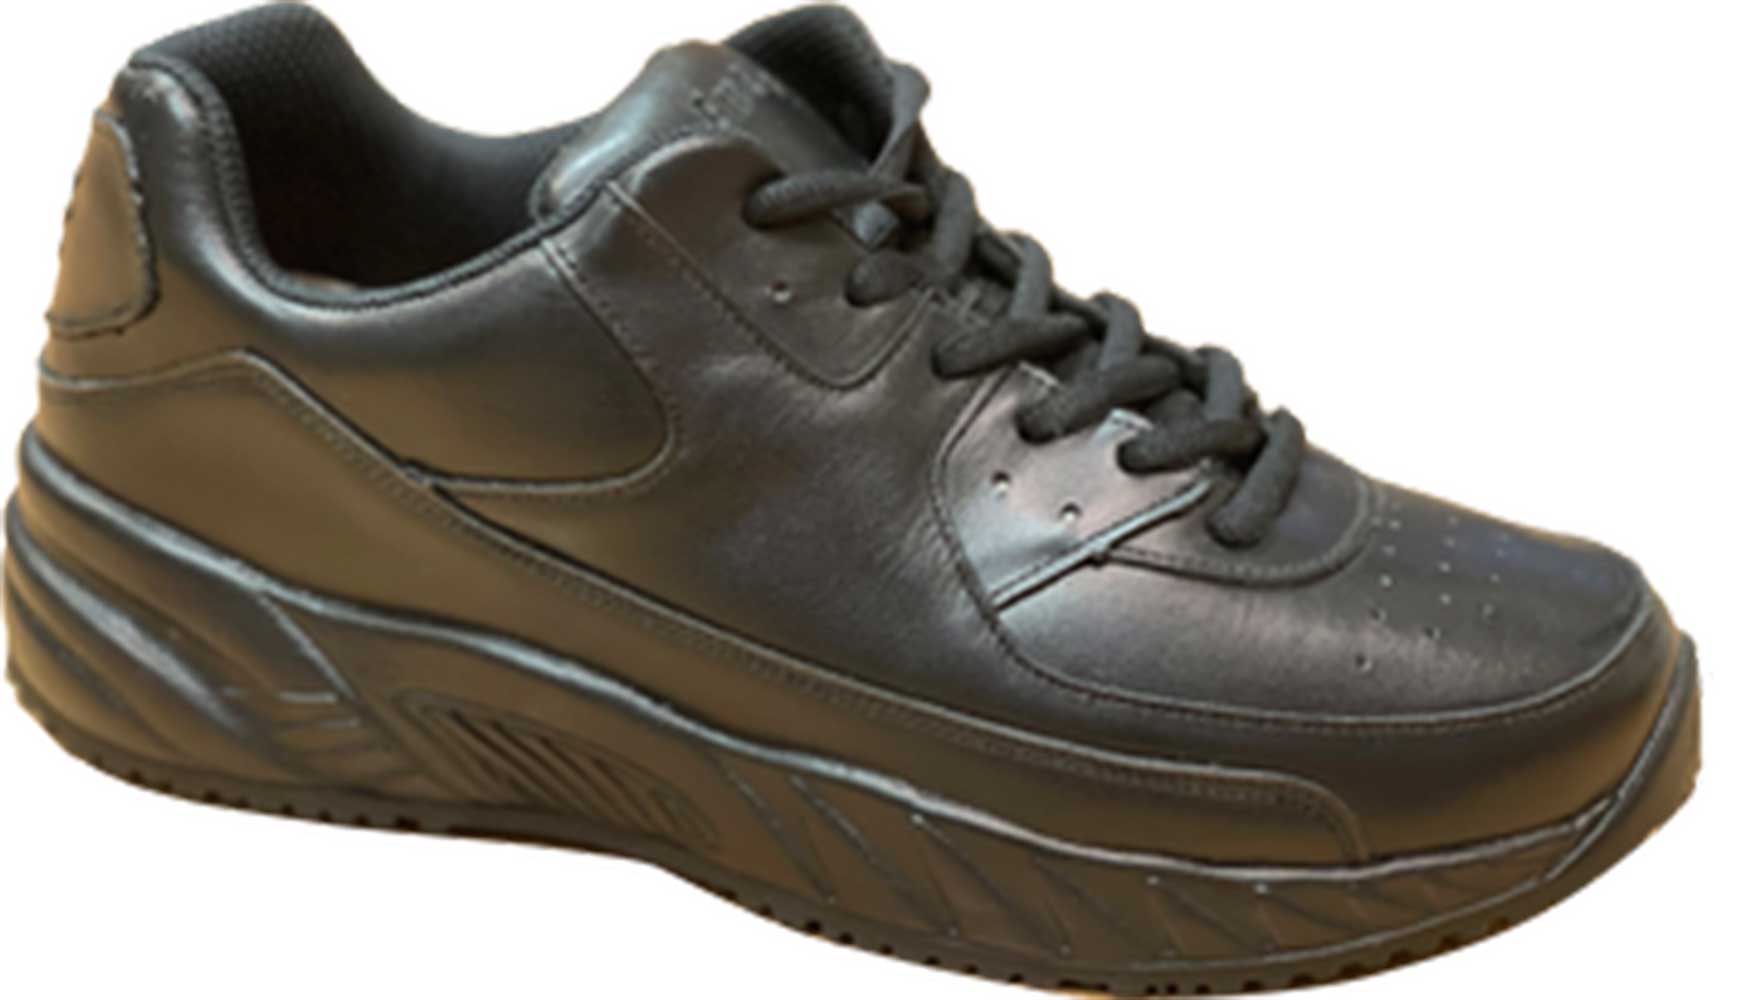 Apis Mt. Emey 3405 Women's Slip Resistant Utility Shoes - Comfort Orthopedic Diabetic Shoe - Extra Depth For Orthotics - Extra Wide